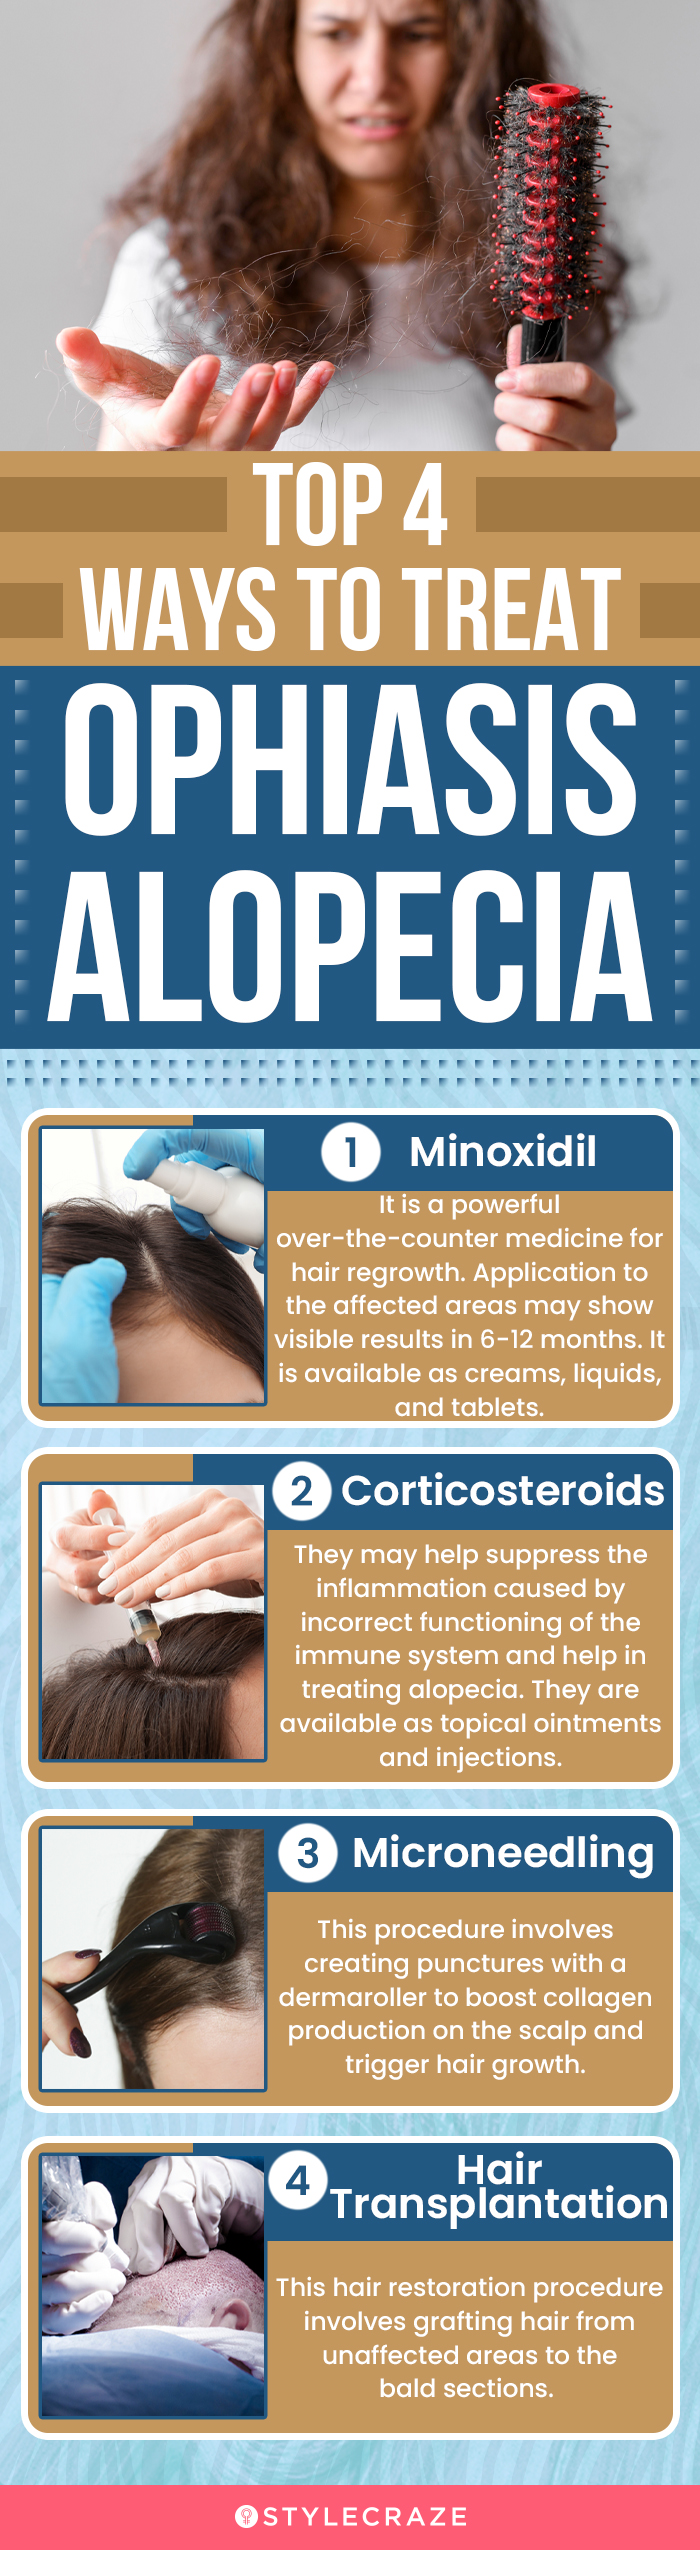 top 4 ways to treat ophiasis alopecia (infographic)